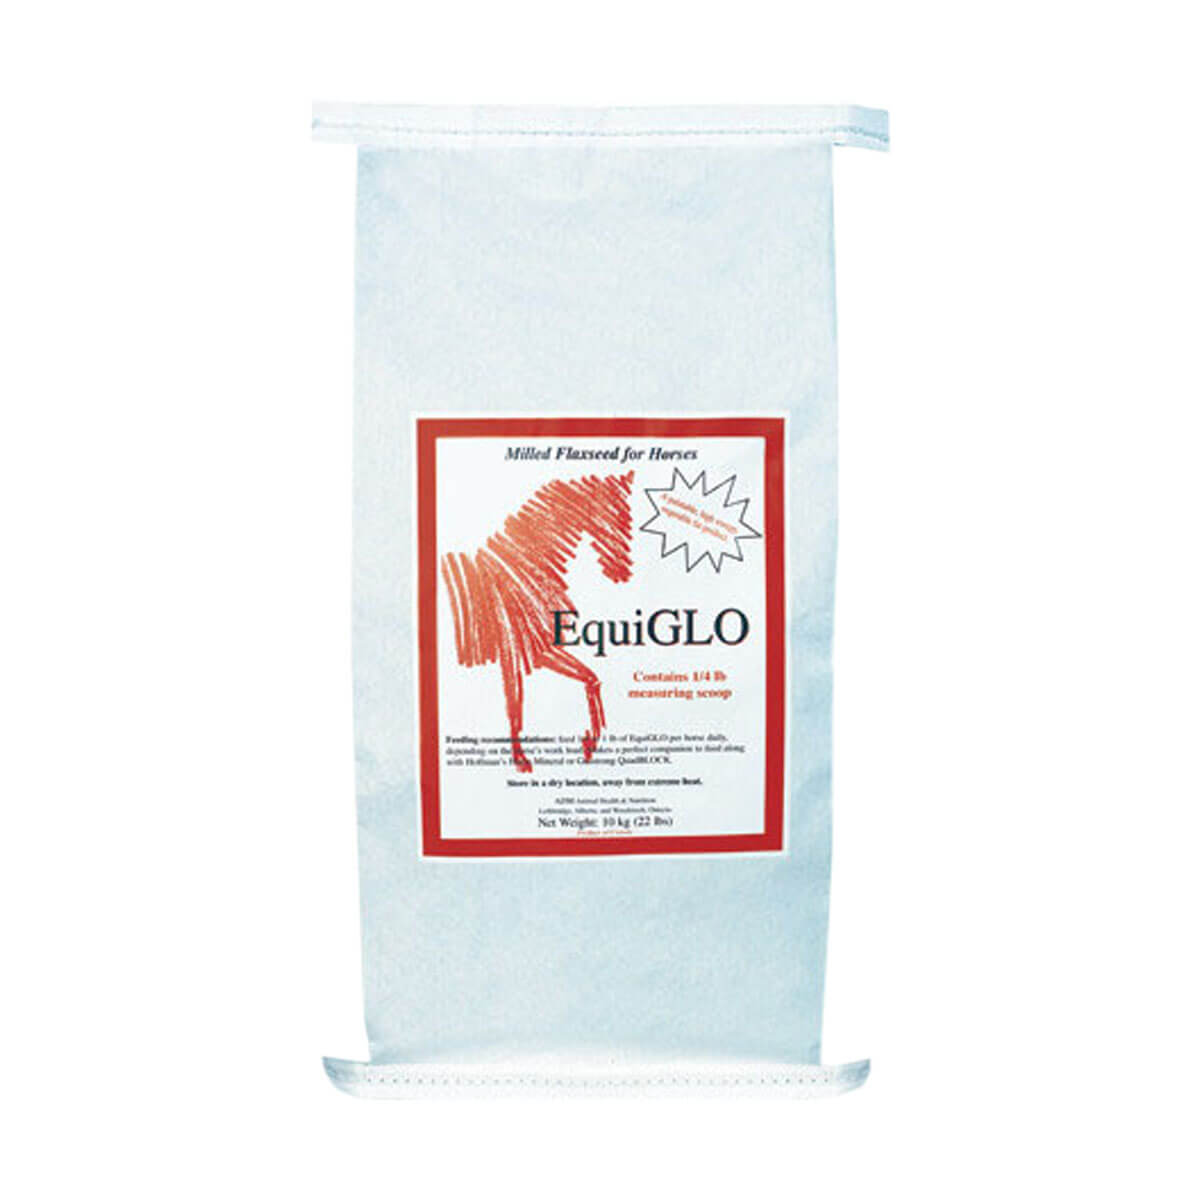 EquiGLO Milled Flaxseed - 22 lb